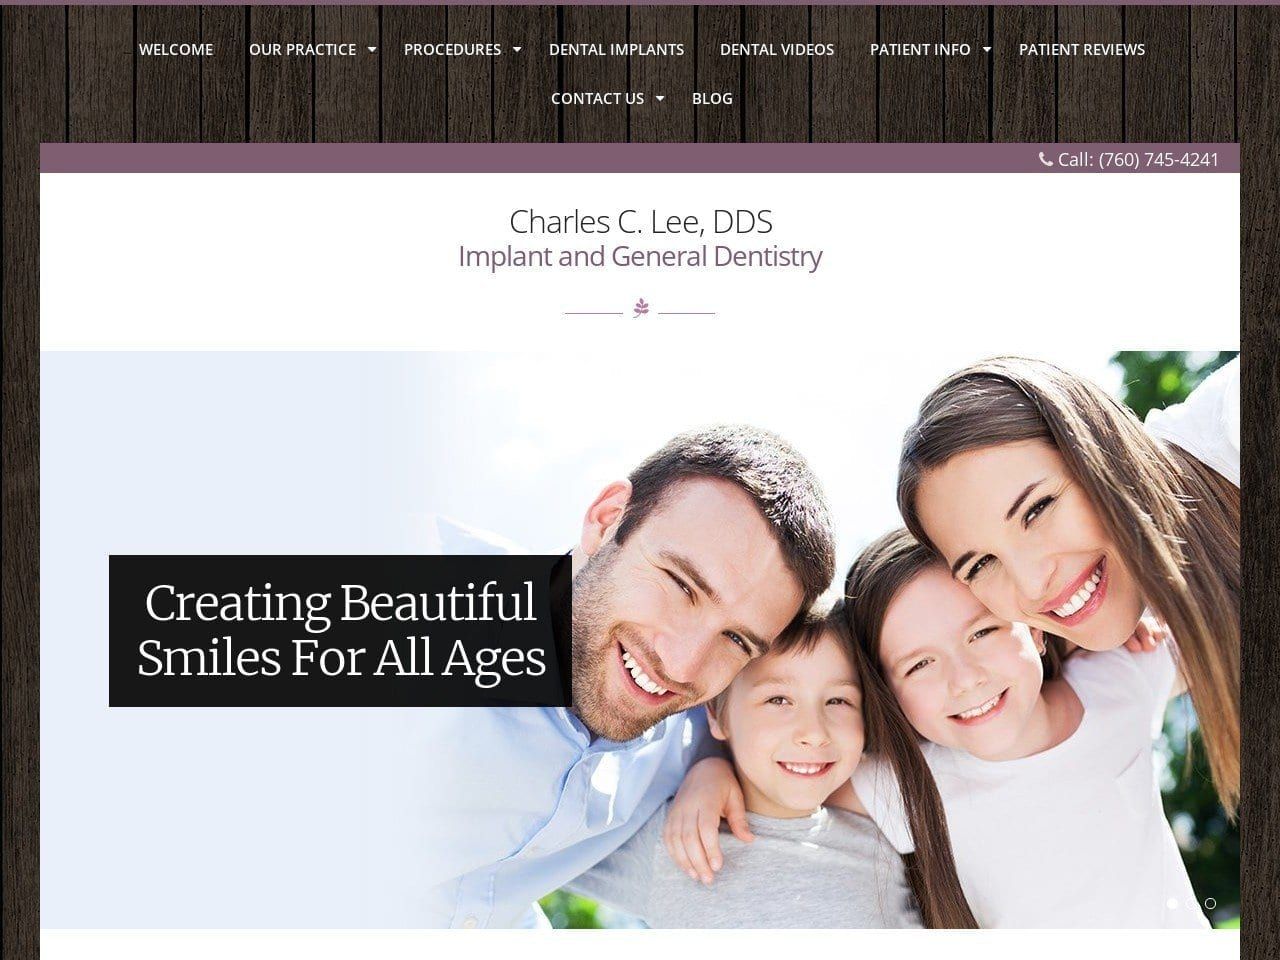 Charles C. Lee D.D.S. Inc. Website Screenshot from charlesleedds.com